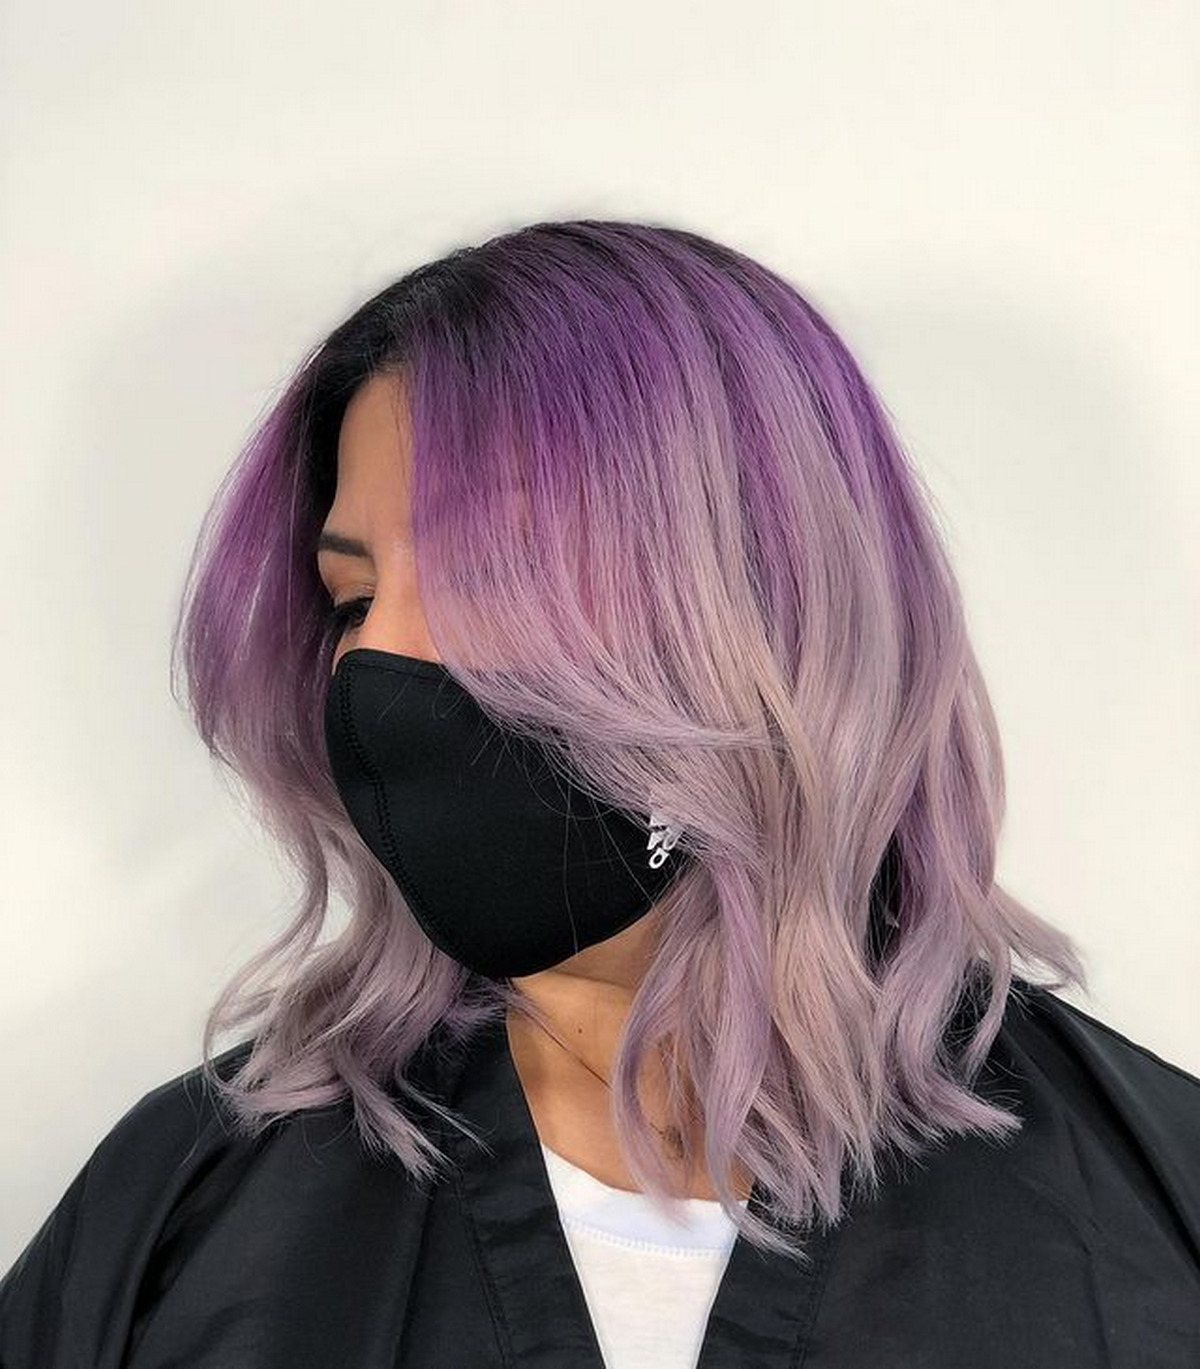 Faded Purple Hair